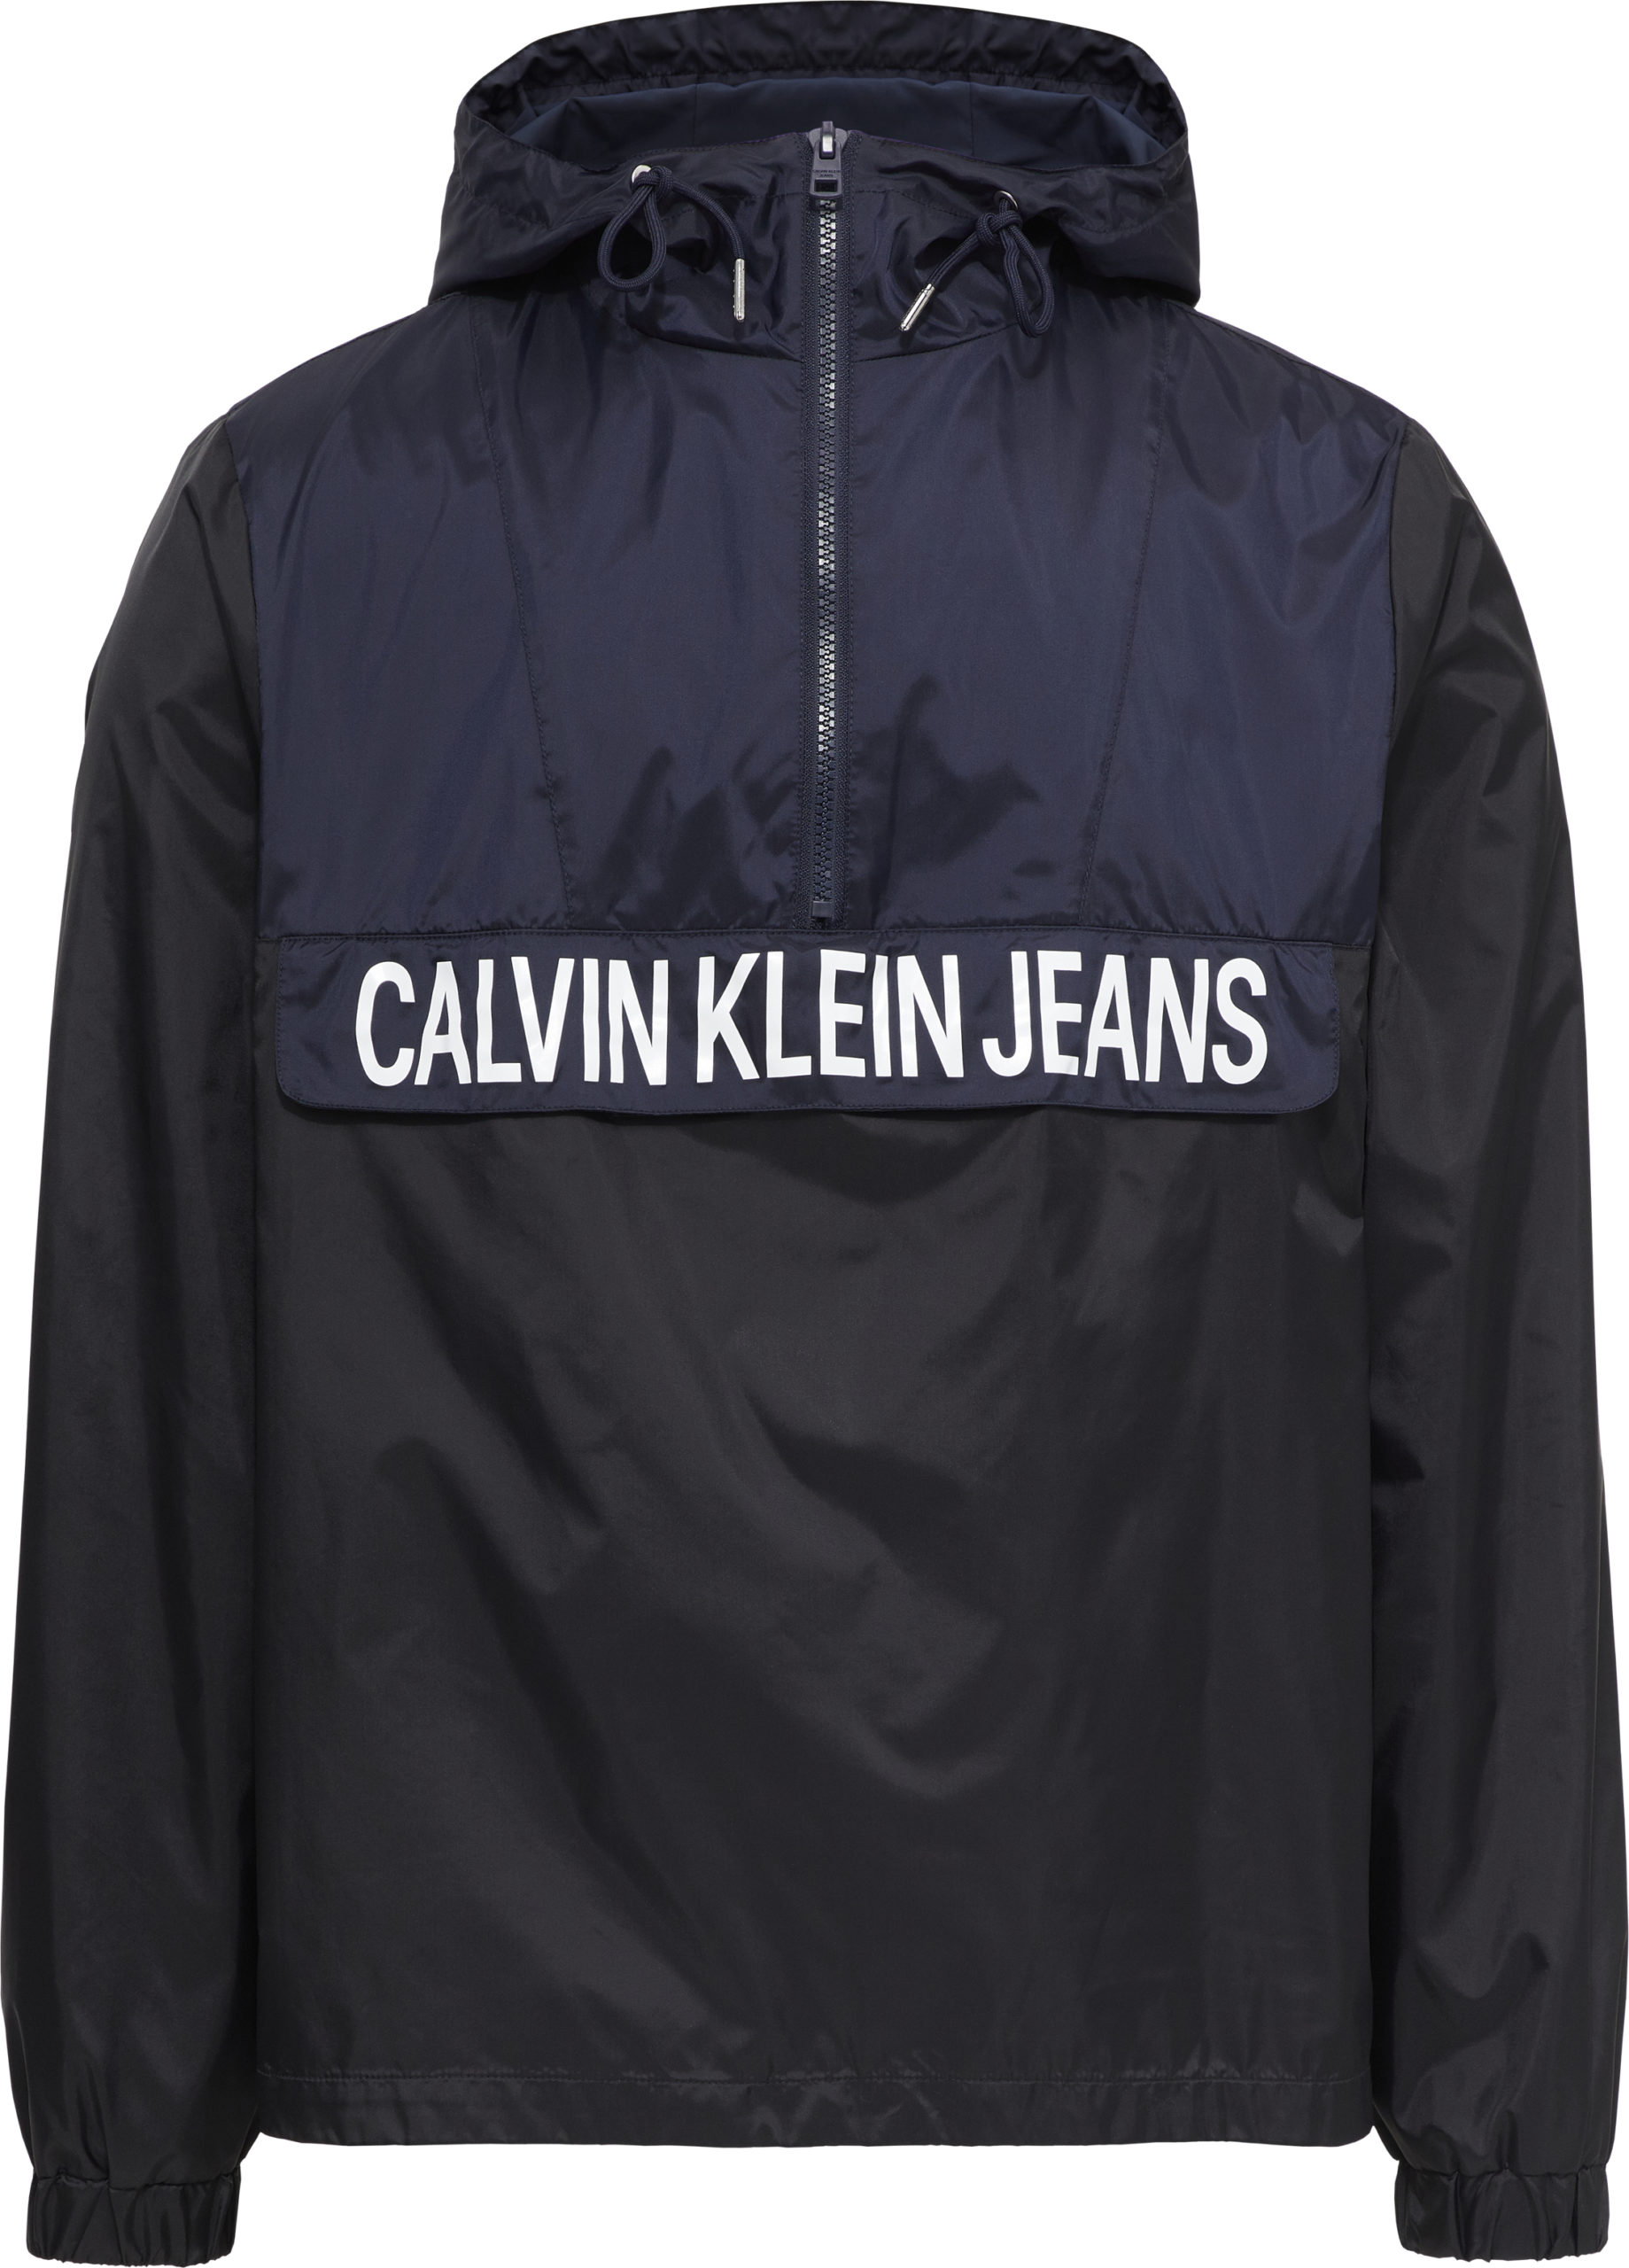 Calvin Klein Anorak - J Menswear